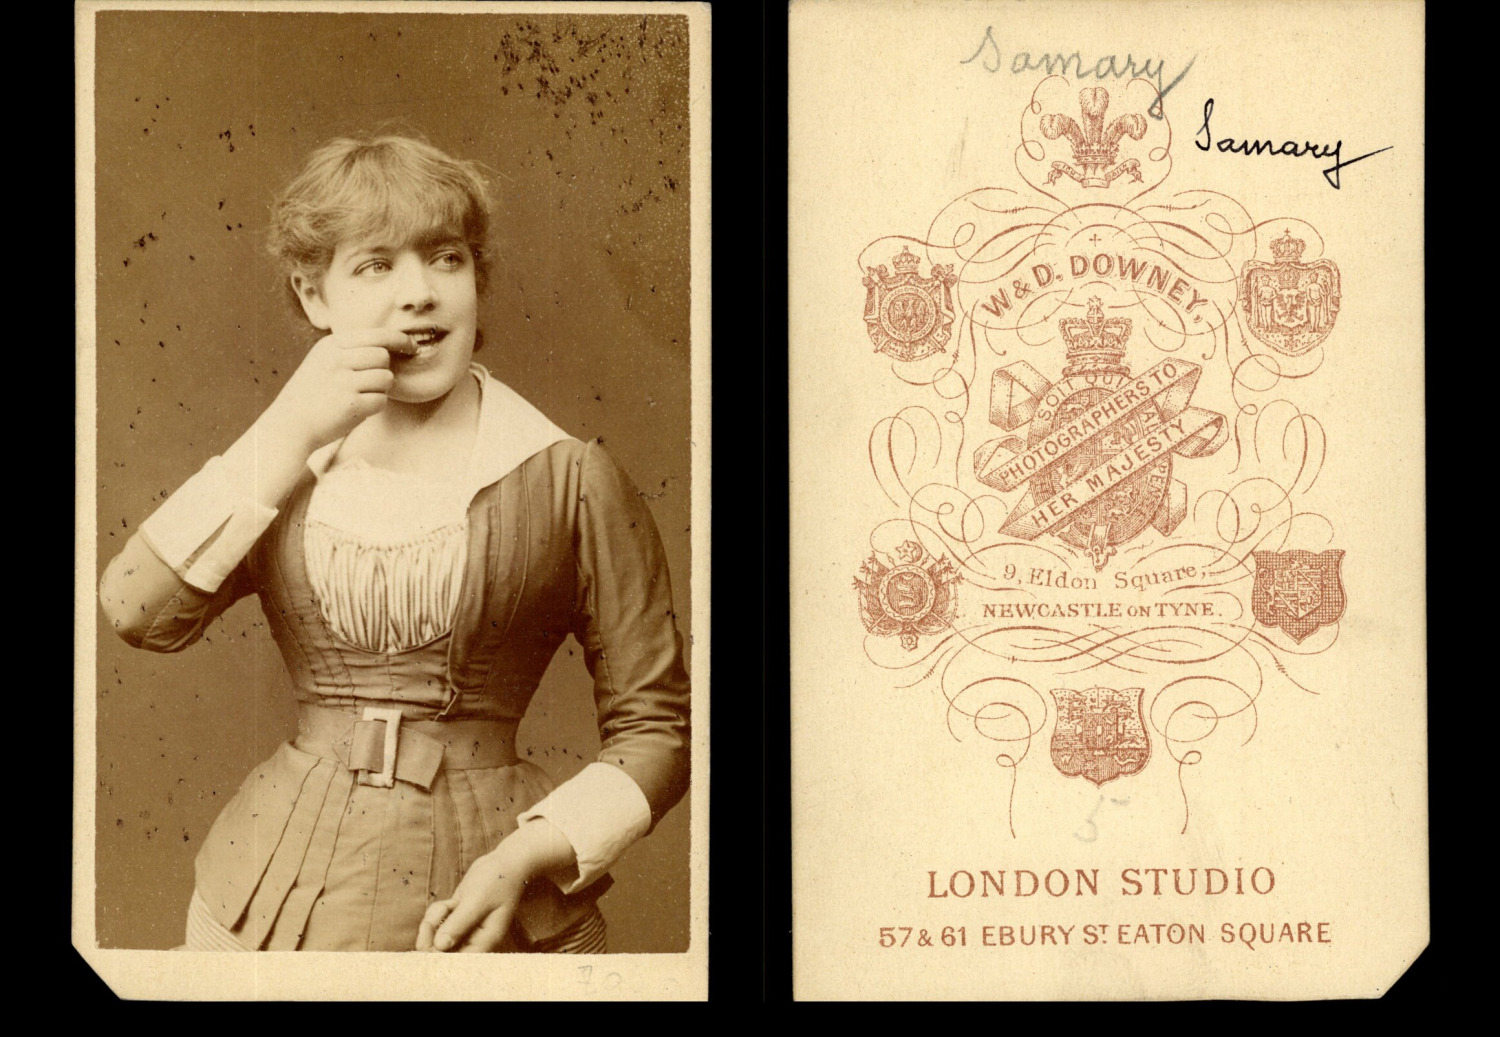 Downey, London, Jeanne Samary Vintage Albumen Print CDV.